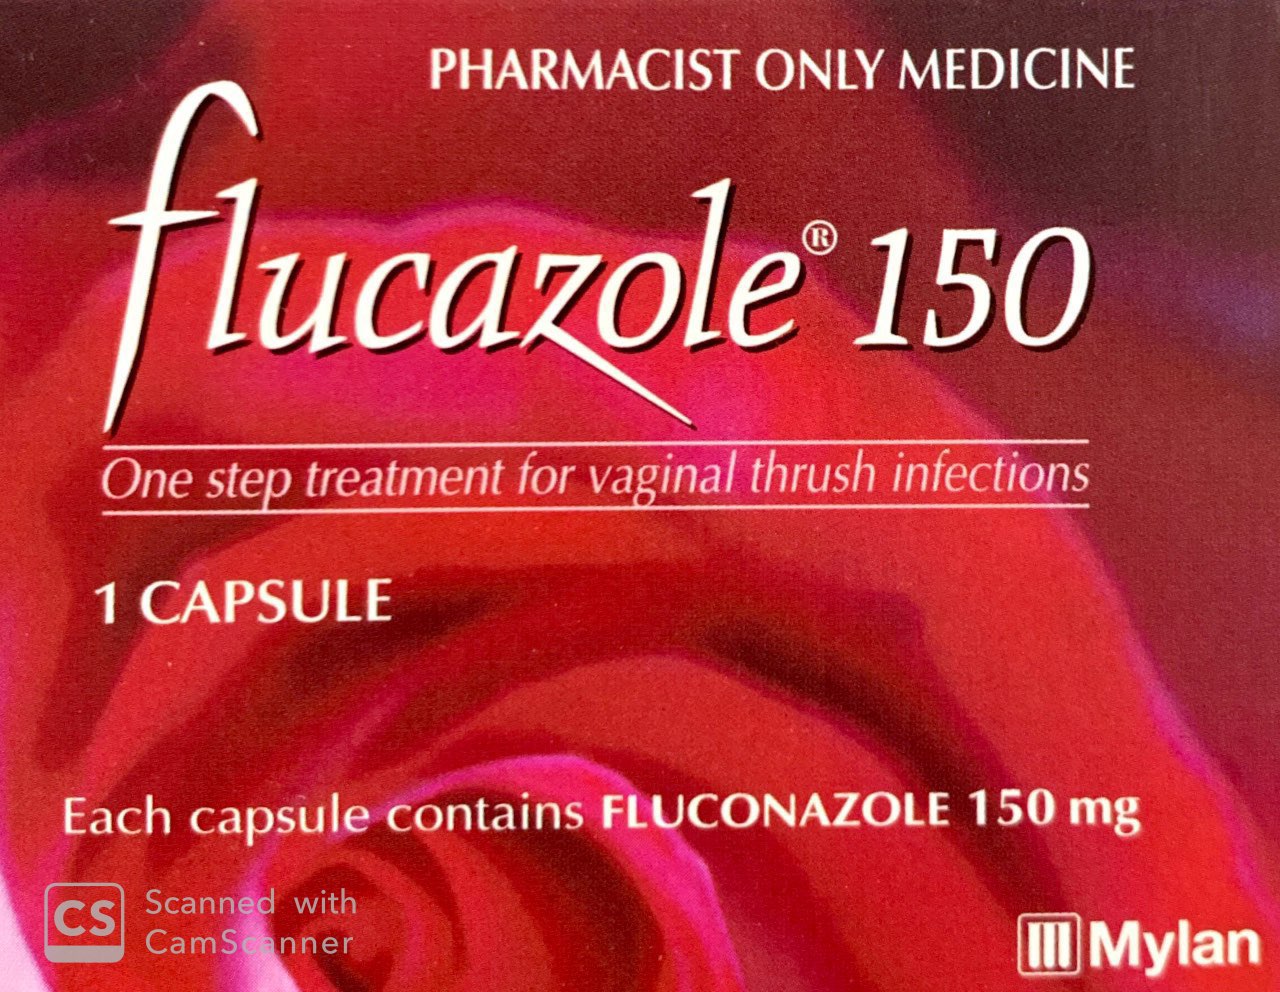 Flucazole - Fluconazole 150mg - 1 Capsule - Pharmacist Only Medicine - Pakuranga Pharmacy